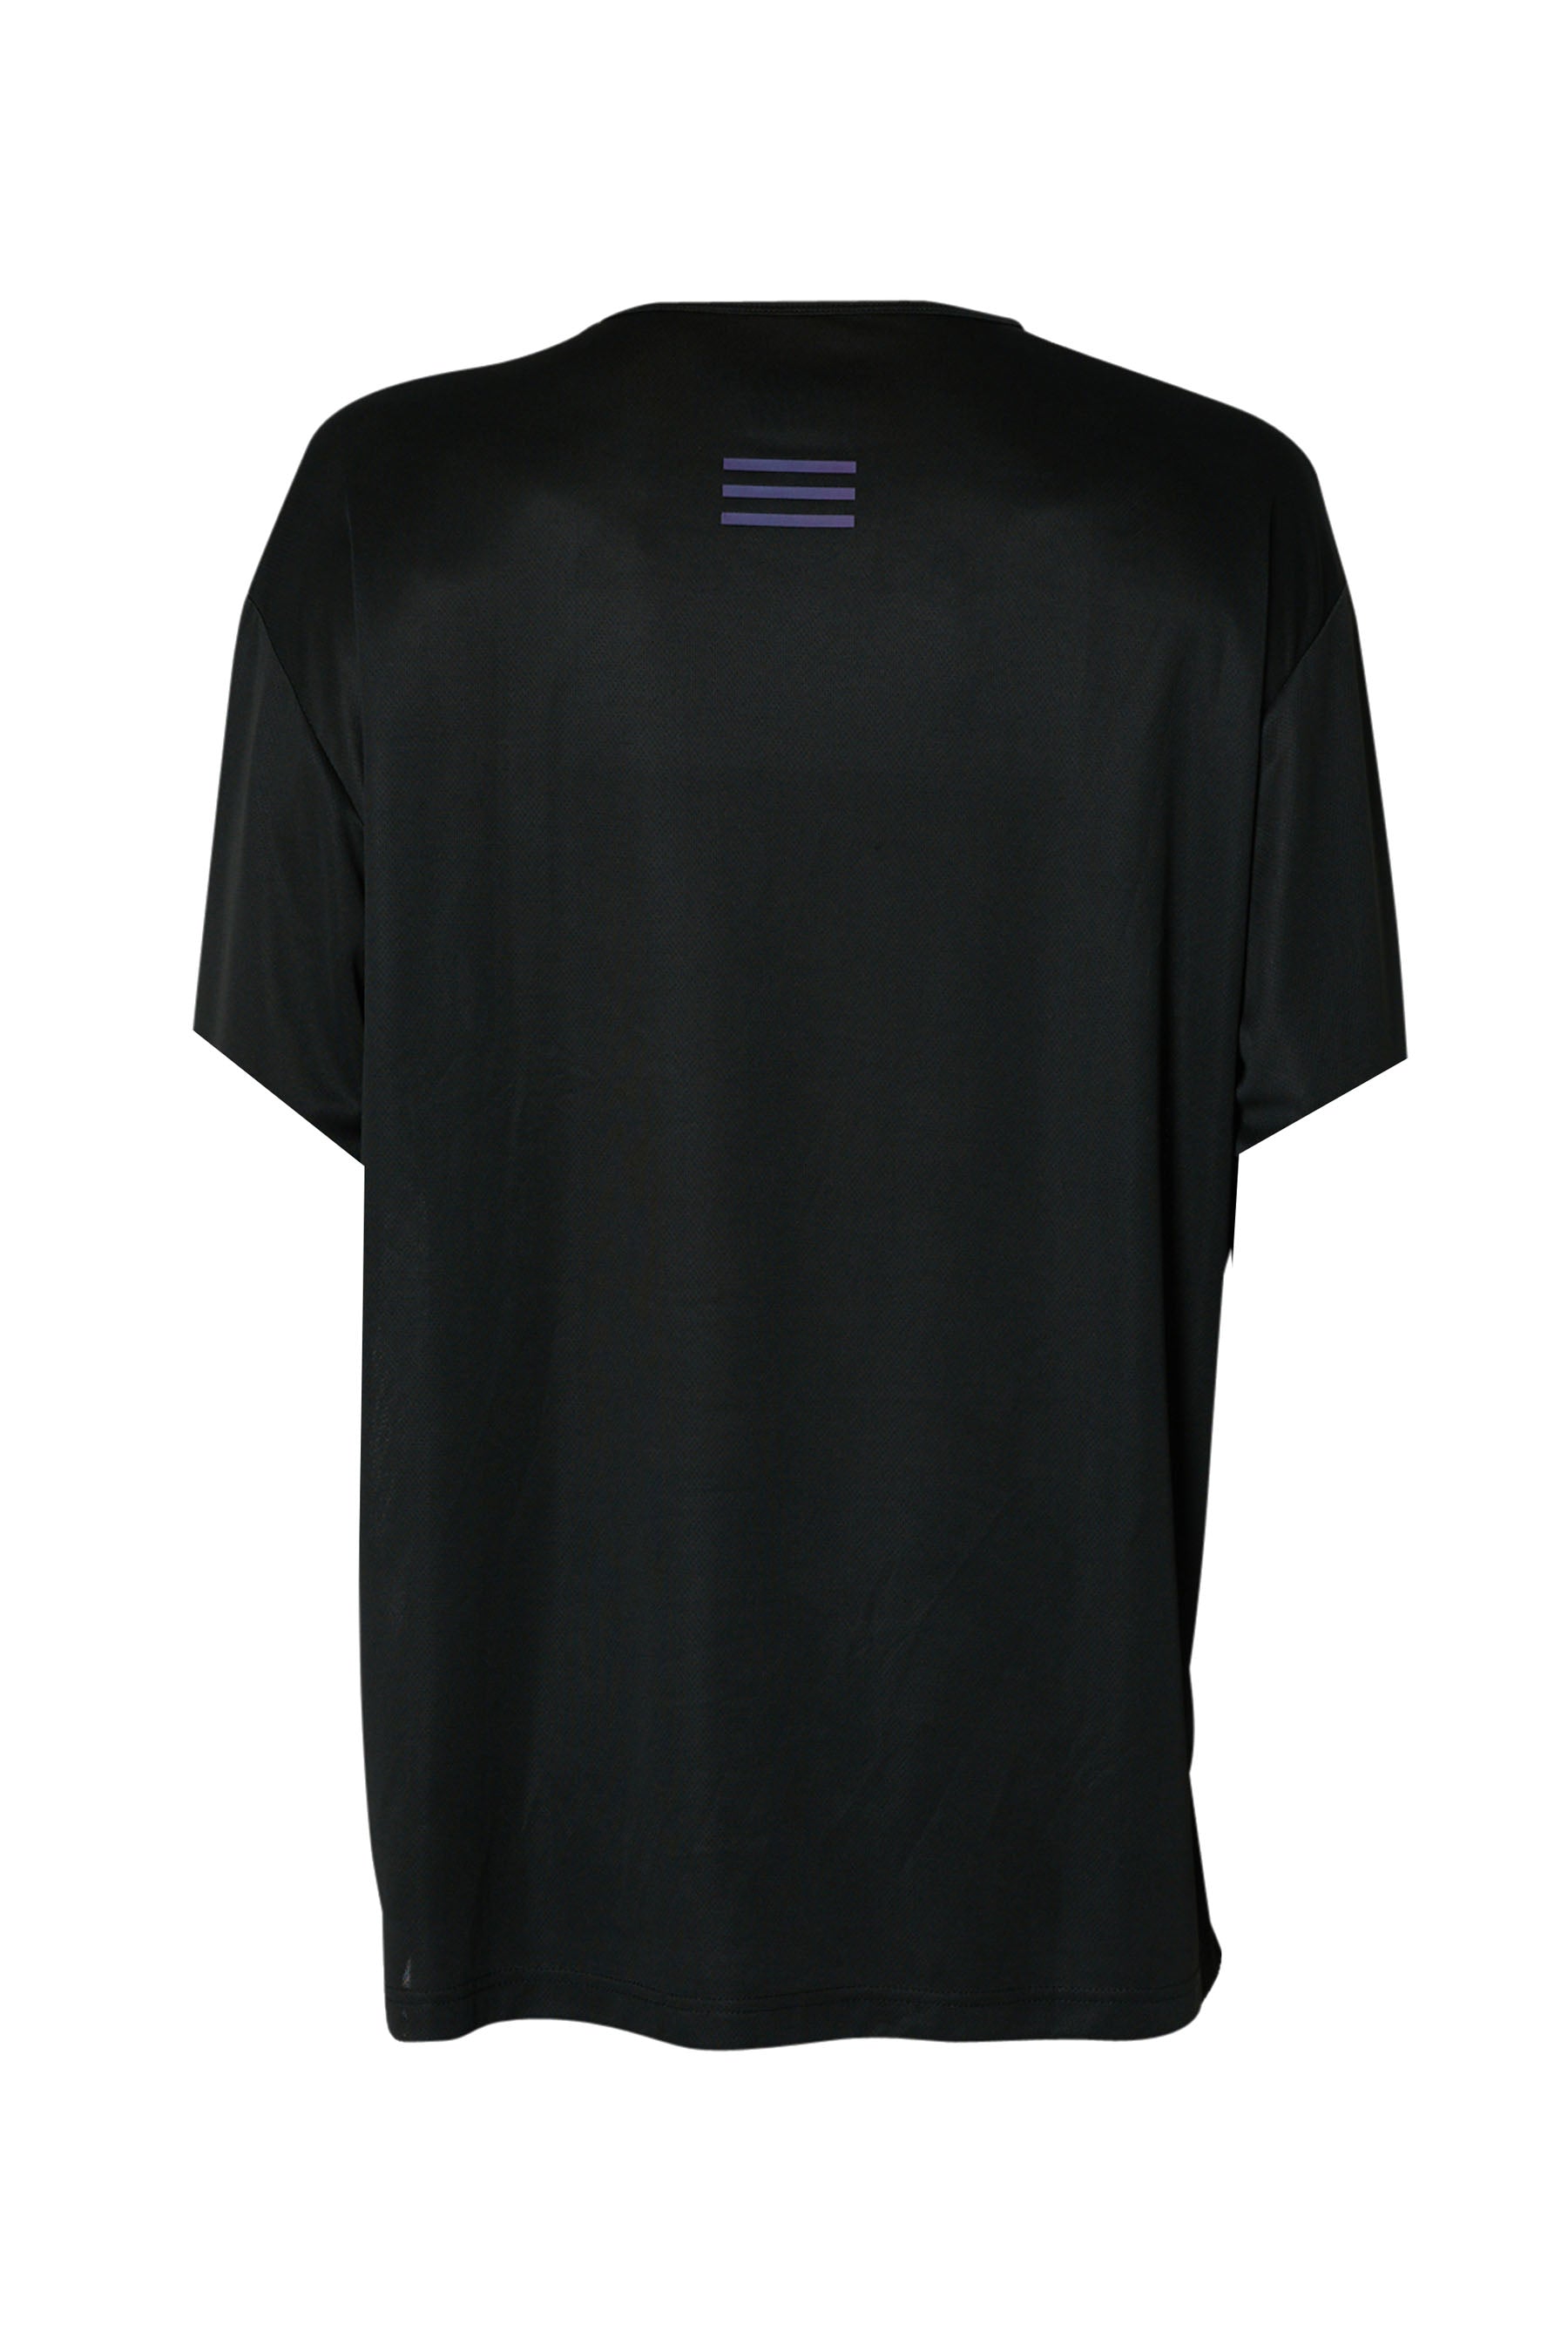 Jetpilot Rx Vault Mens Hydro Short Sleeve T-Shirt - Black